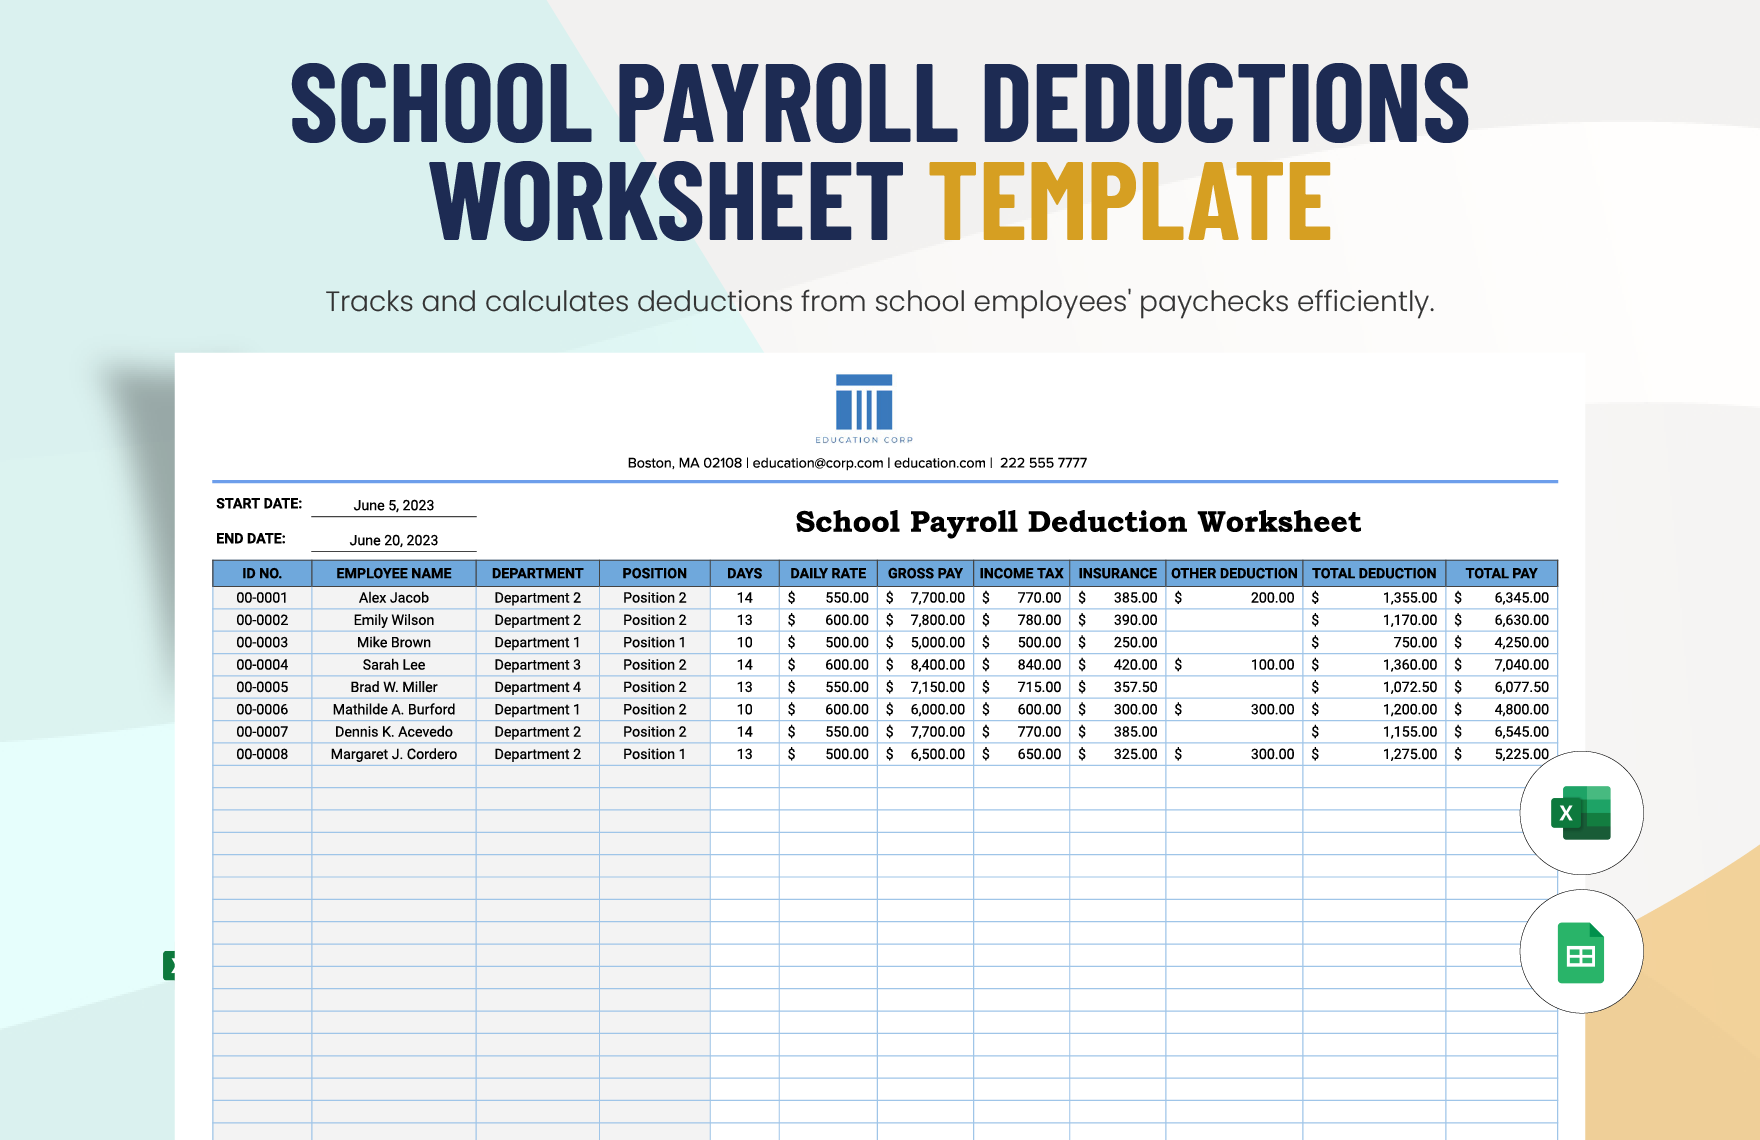 School Payroll Deductions Worksheet Template in Excel, Google Sheets